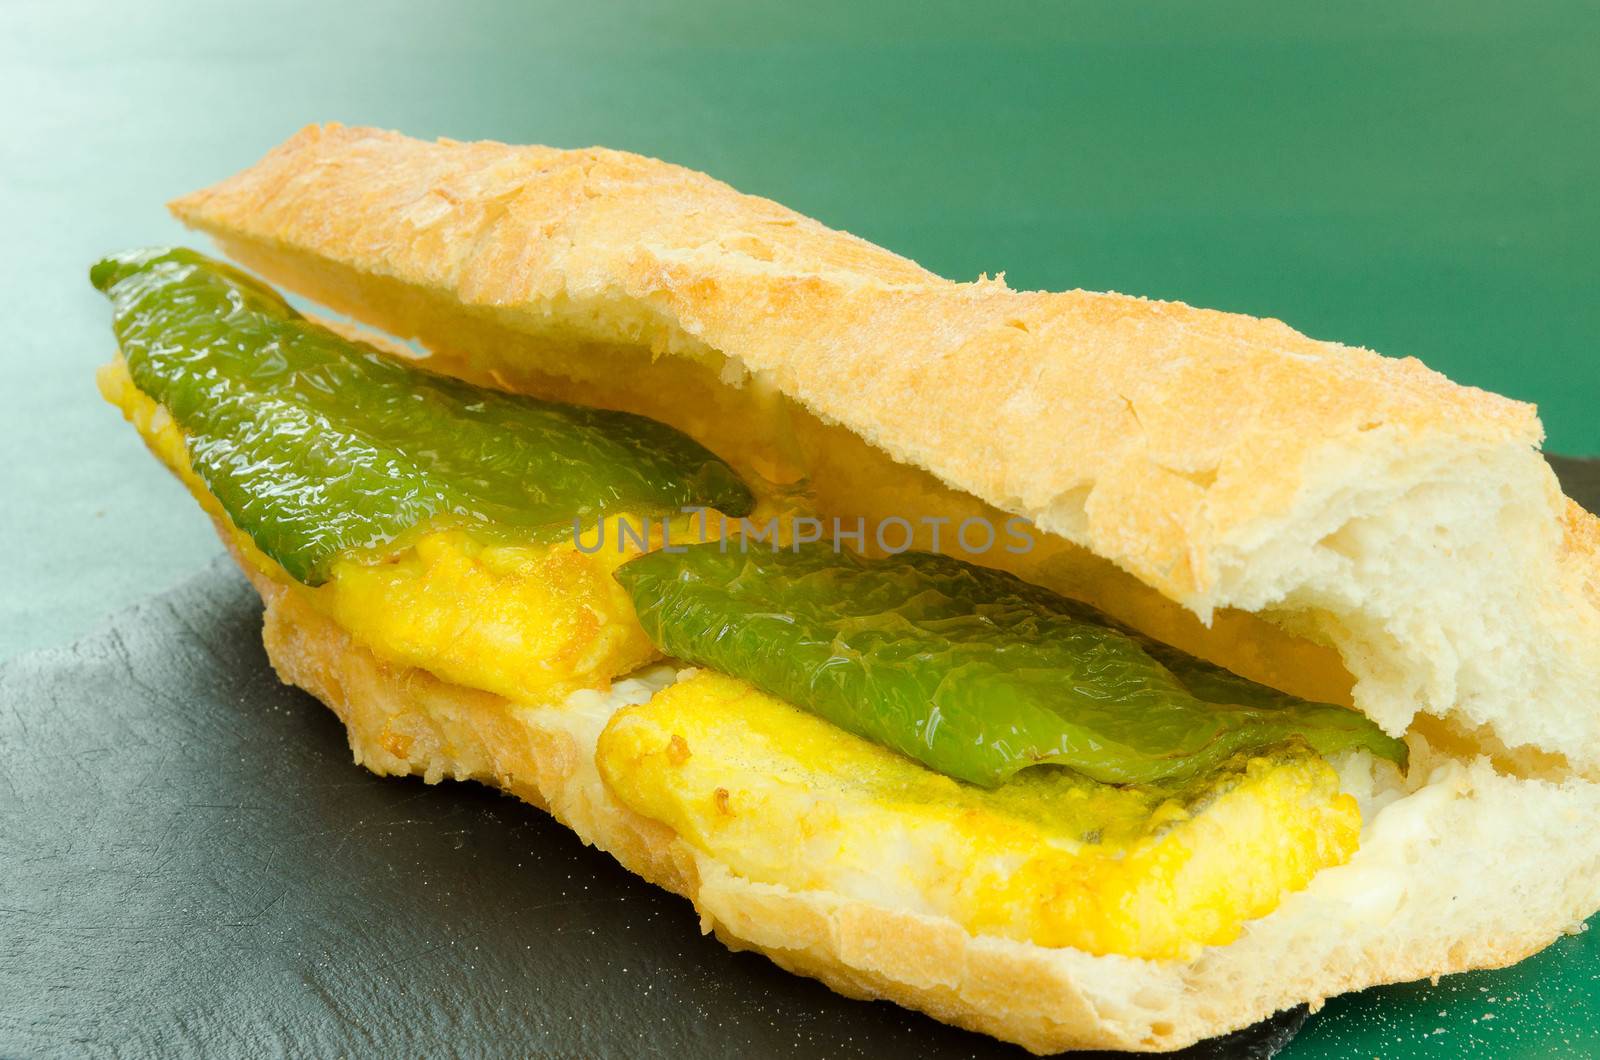 cod sandwich with peppers by bpardofotografia